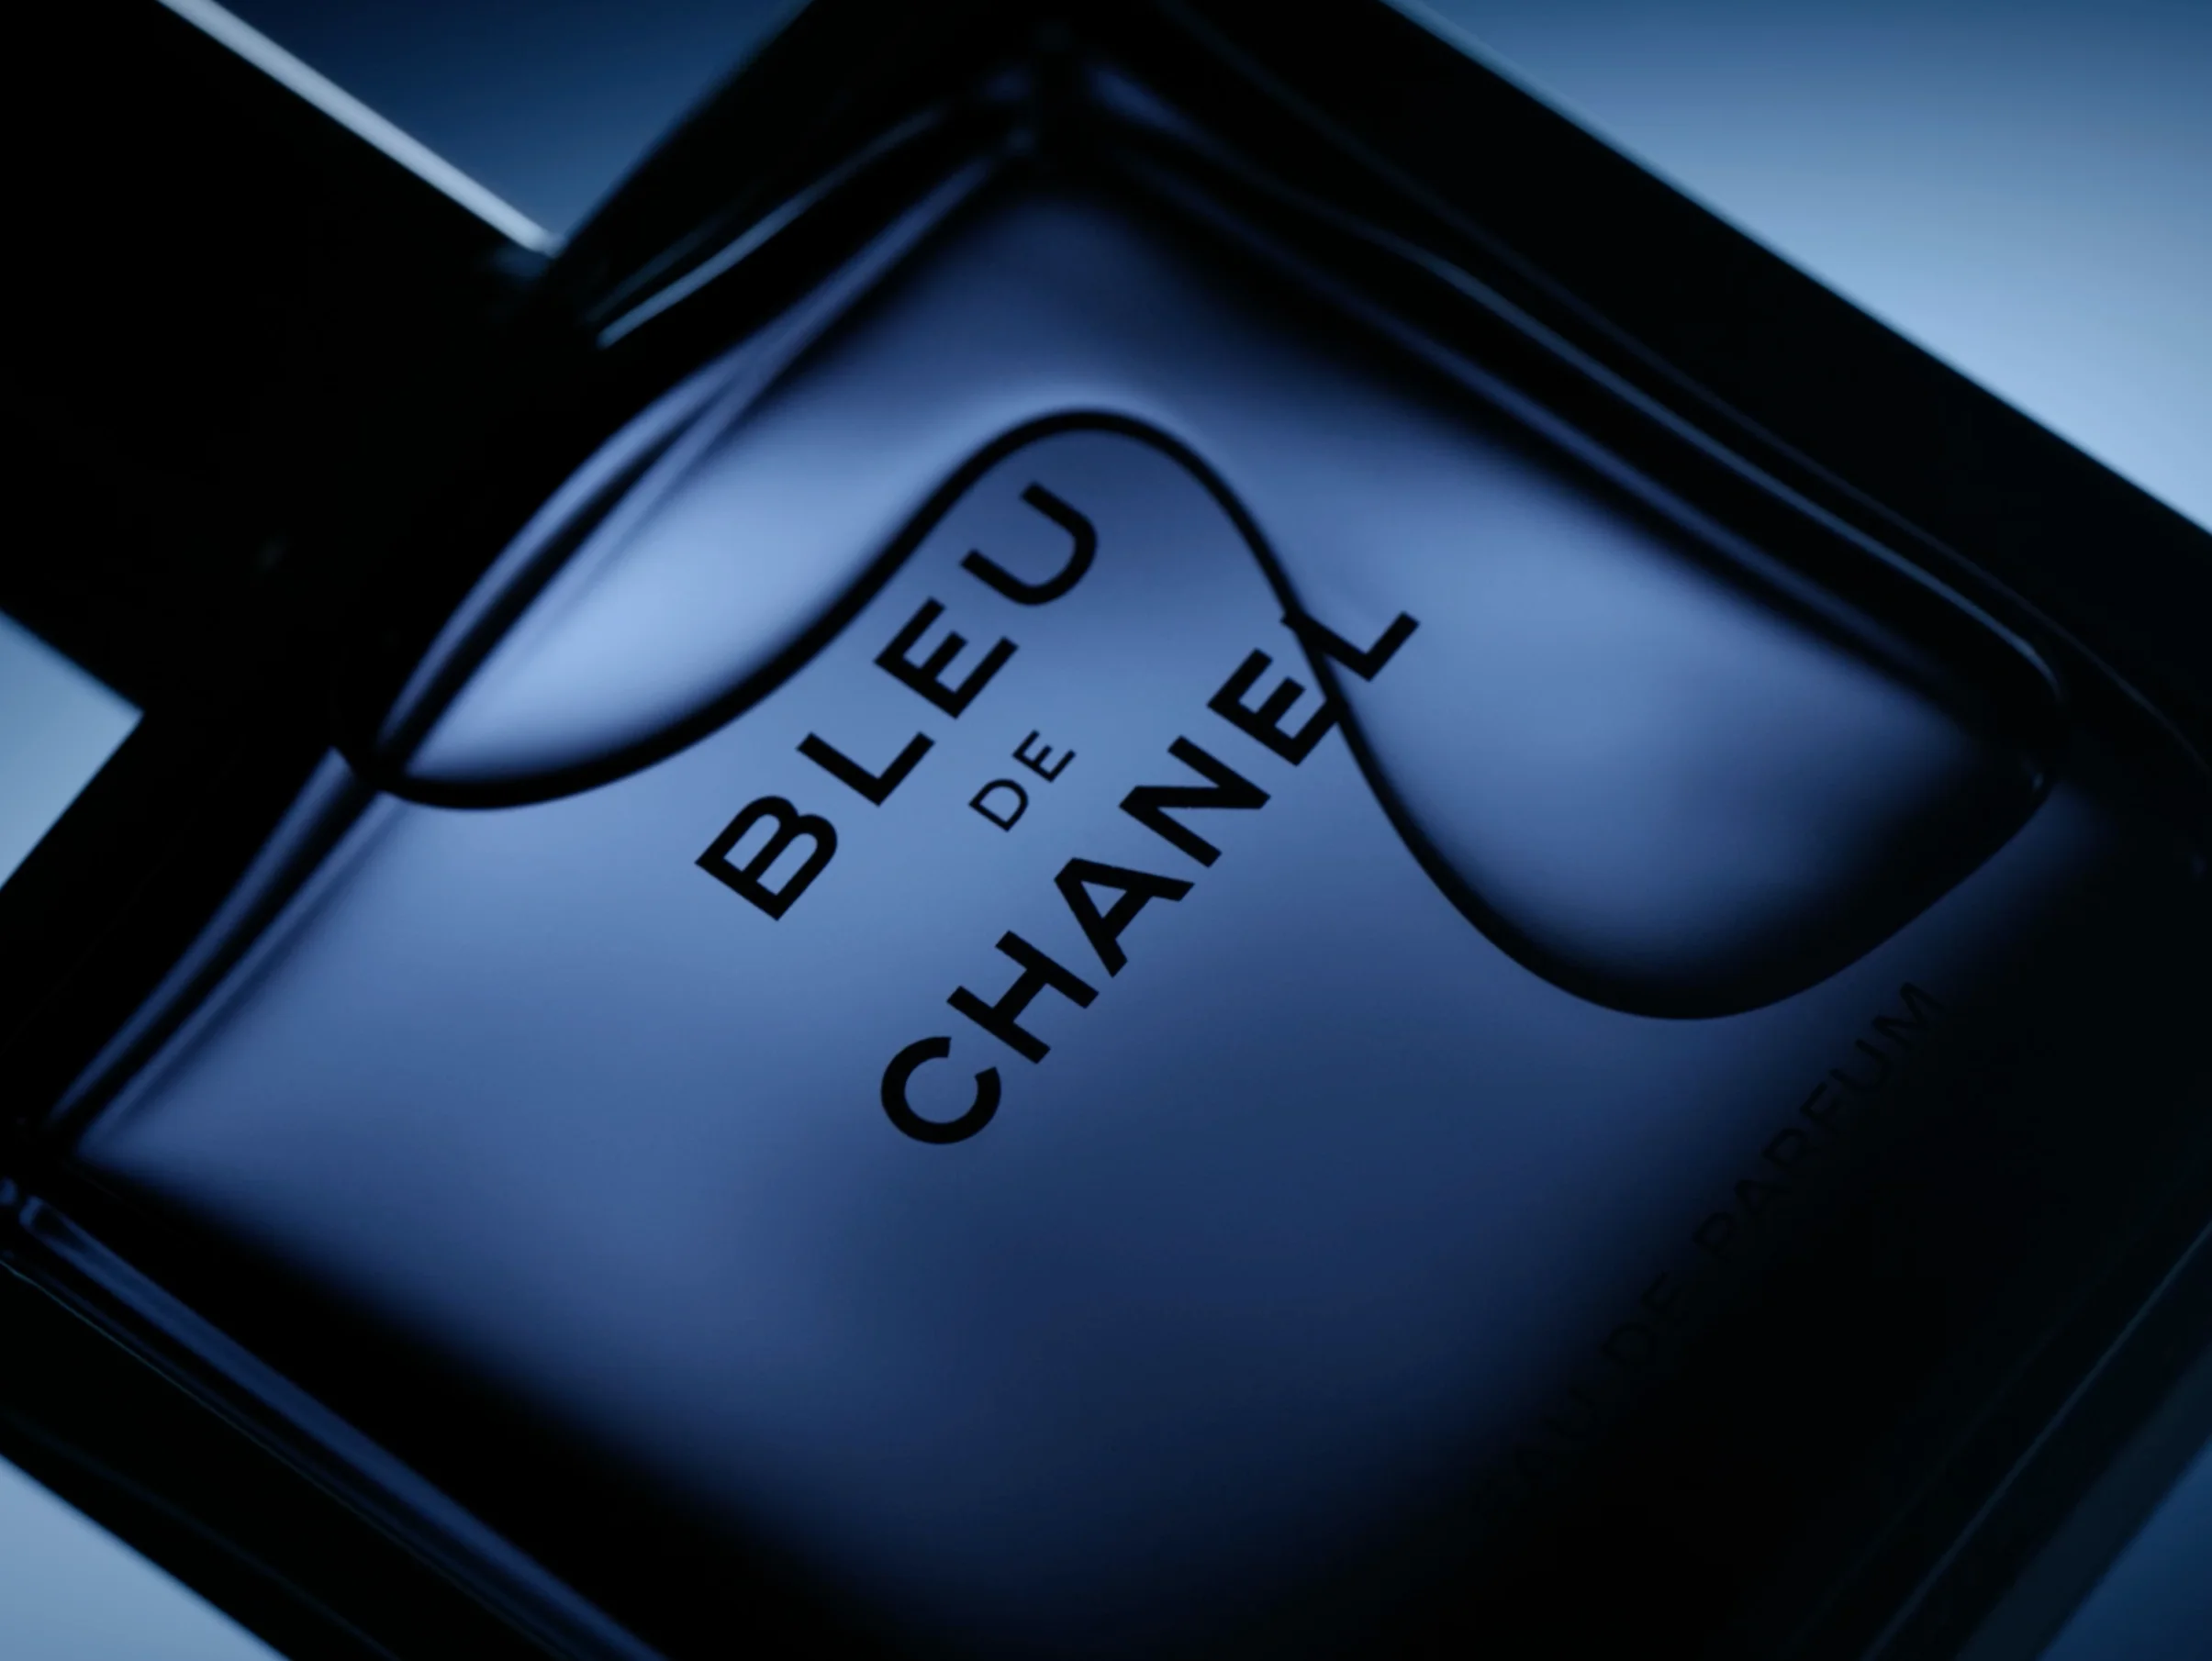 BLEU de CHANEL, the 2018 film with Gaspard Ulliel – CHANEL Fragrance.mp4 on  Vimeo